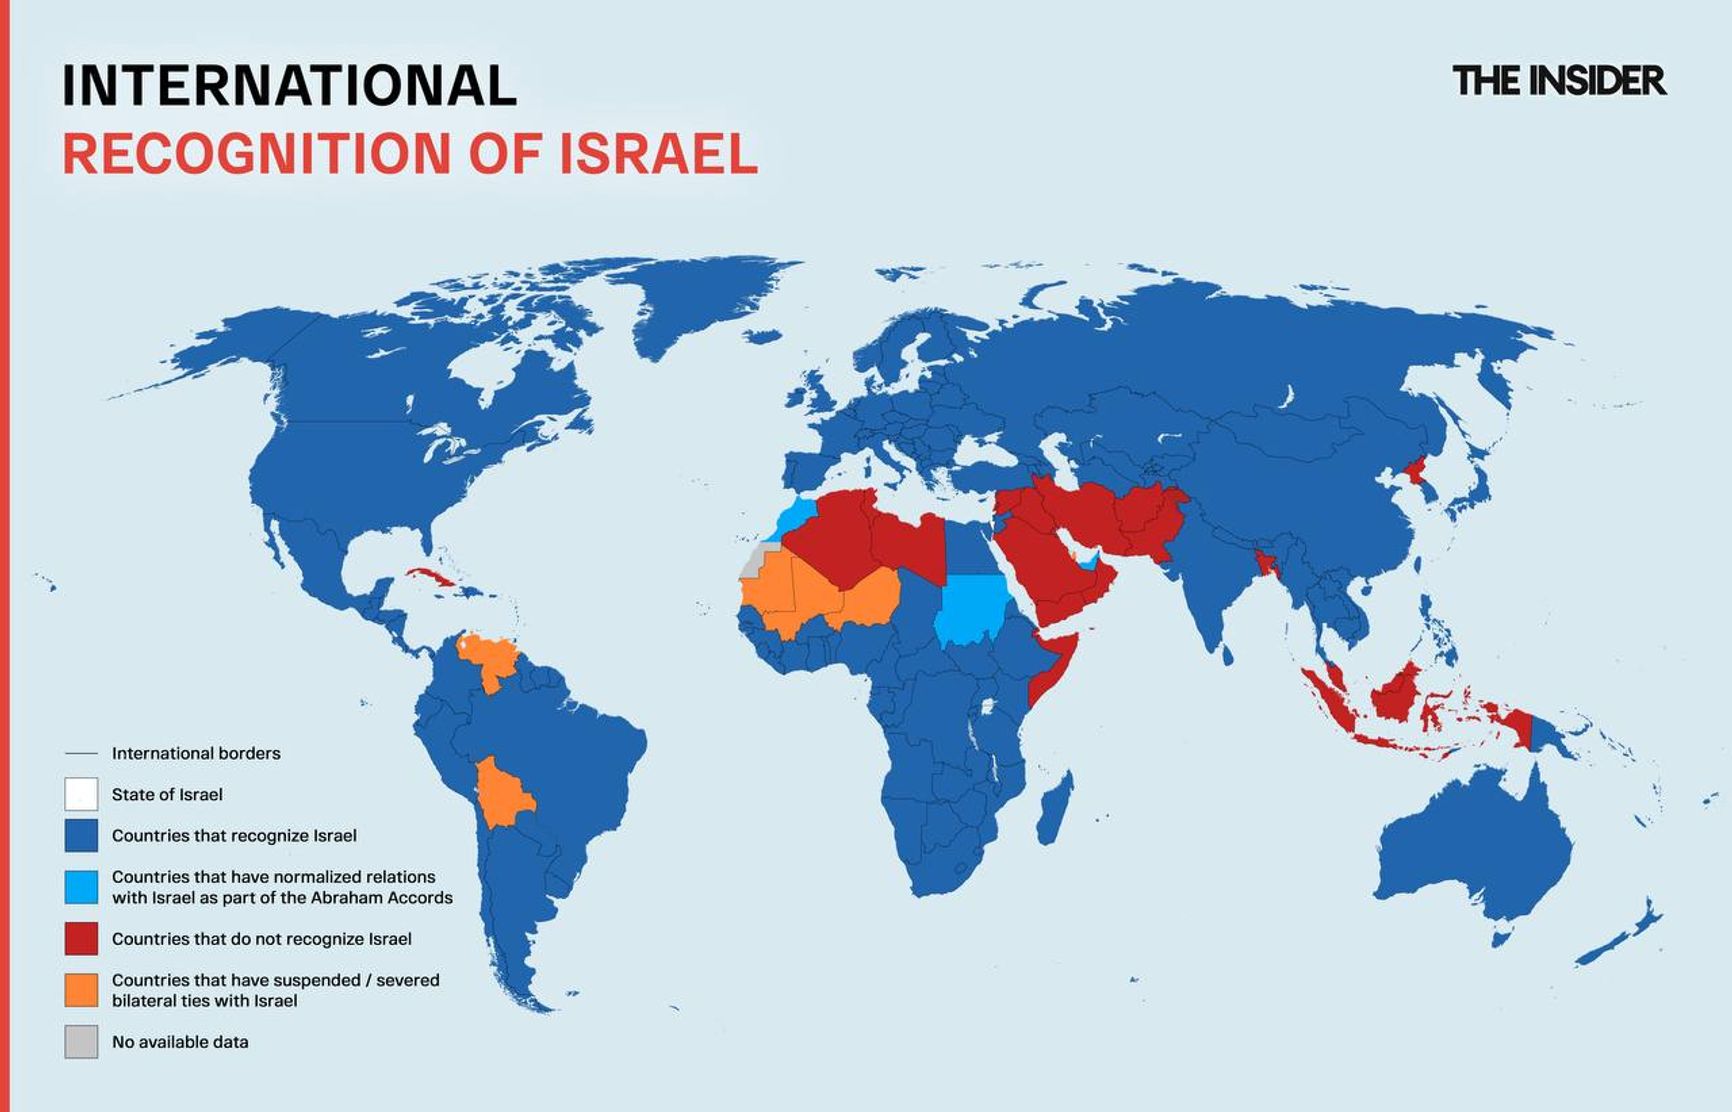 The international legal status of Israel